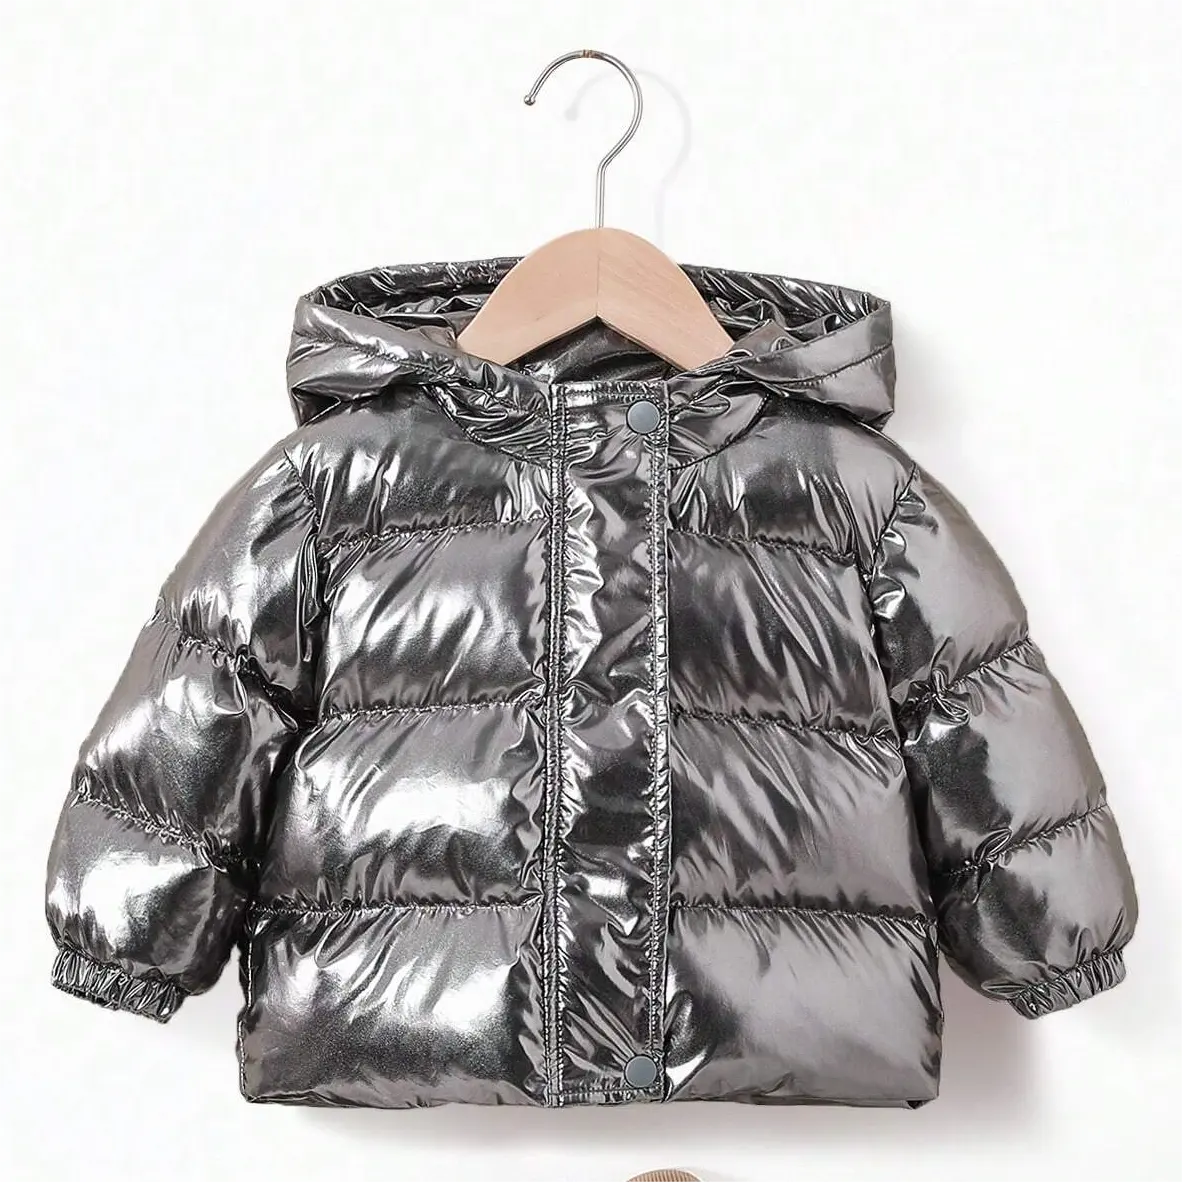 Jaket bulu angsa hangat musim dingin, jaket musim gugur kualitas tinggi bahan perak dengan gelembung empuk, jaket pendek untuk anak laki-laki